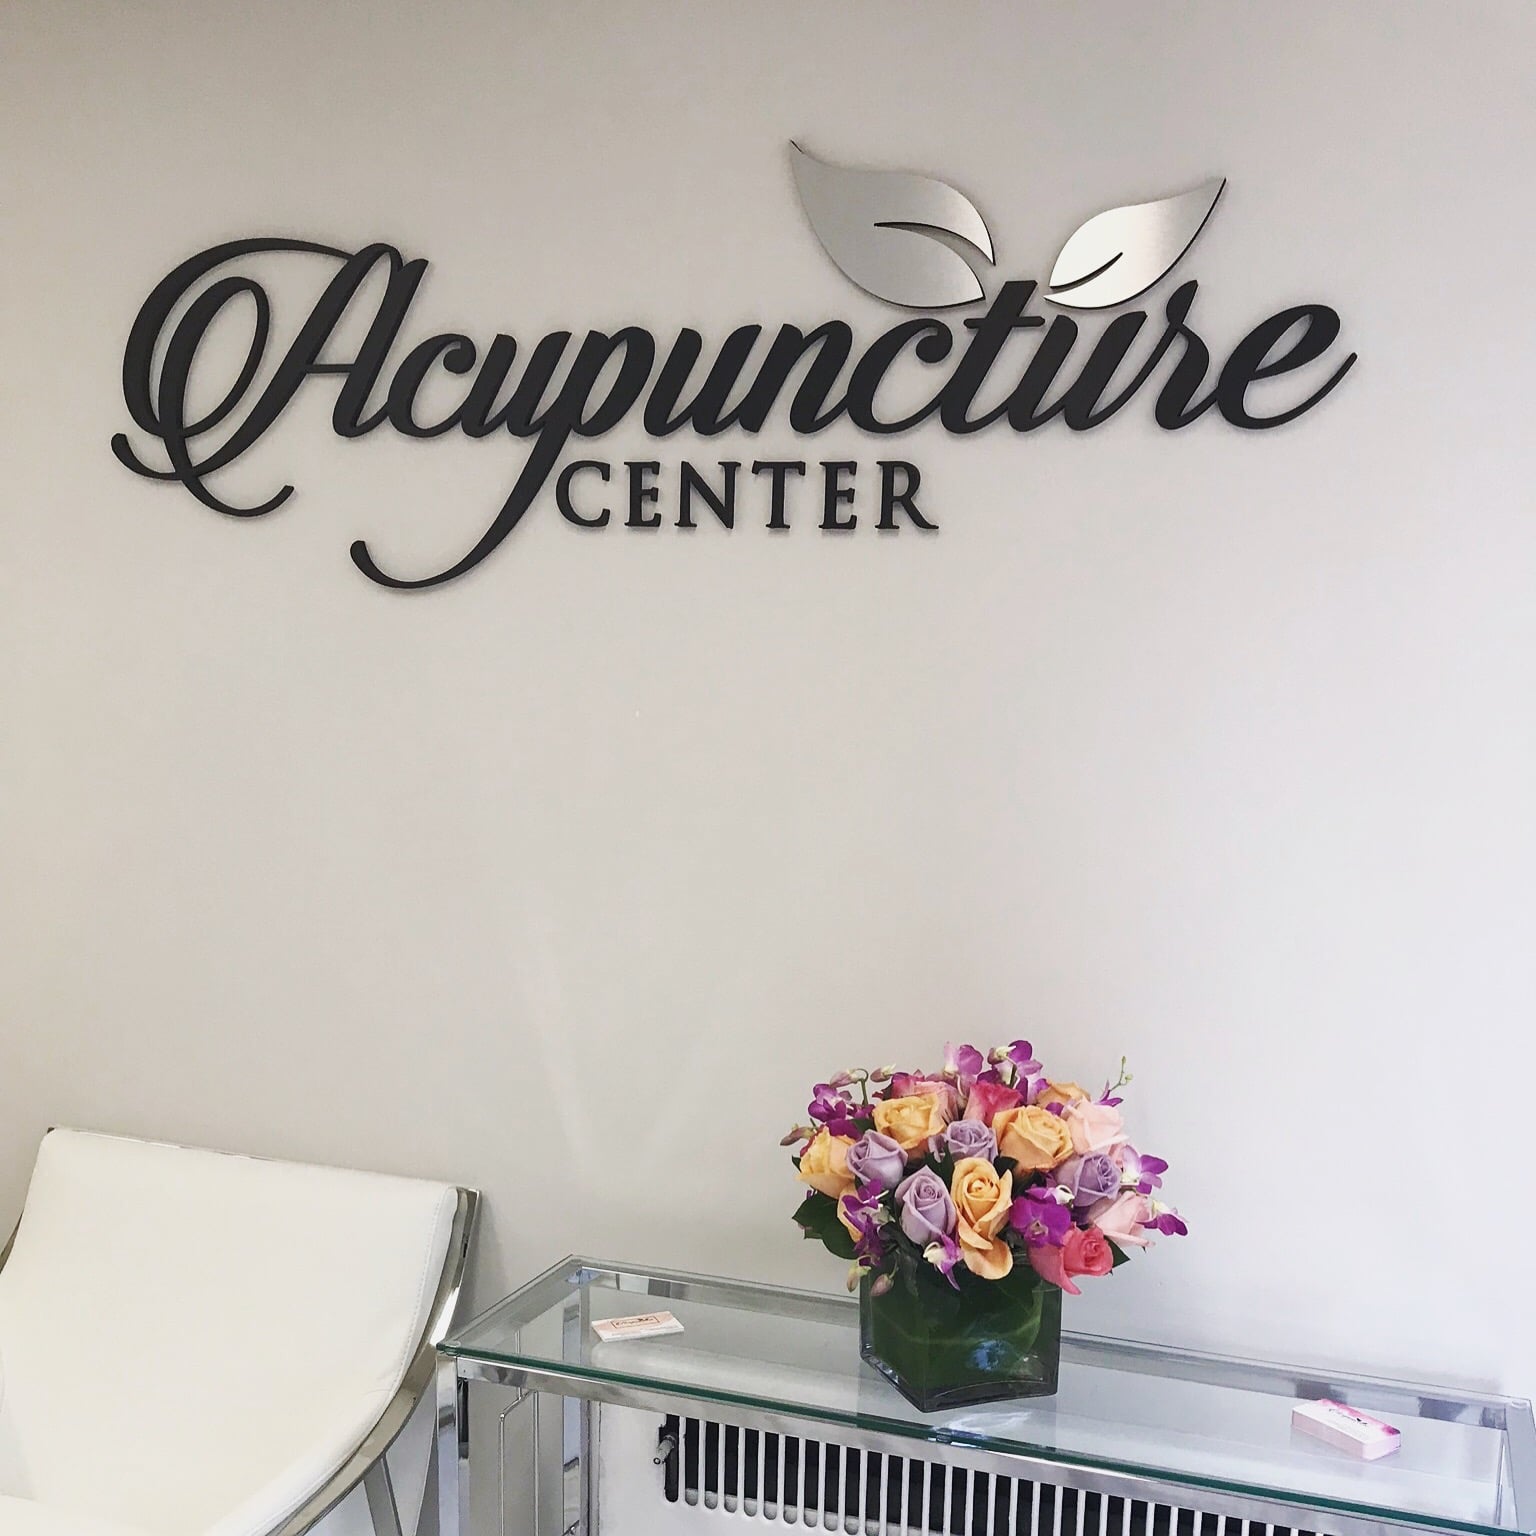 nj acupuncture center lobby